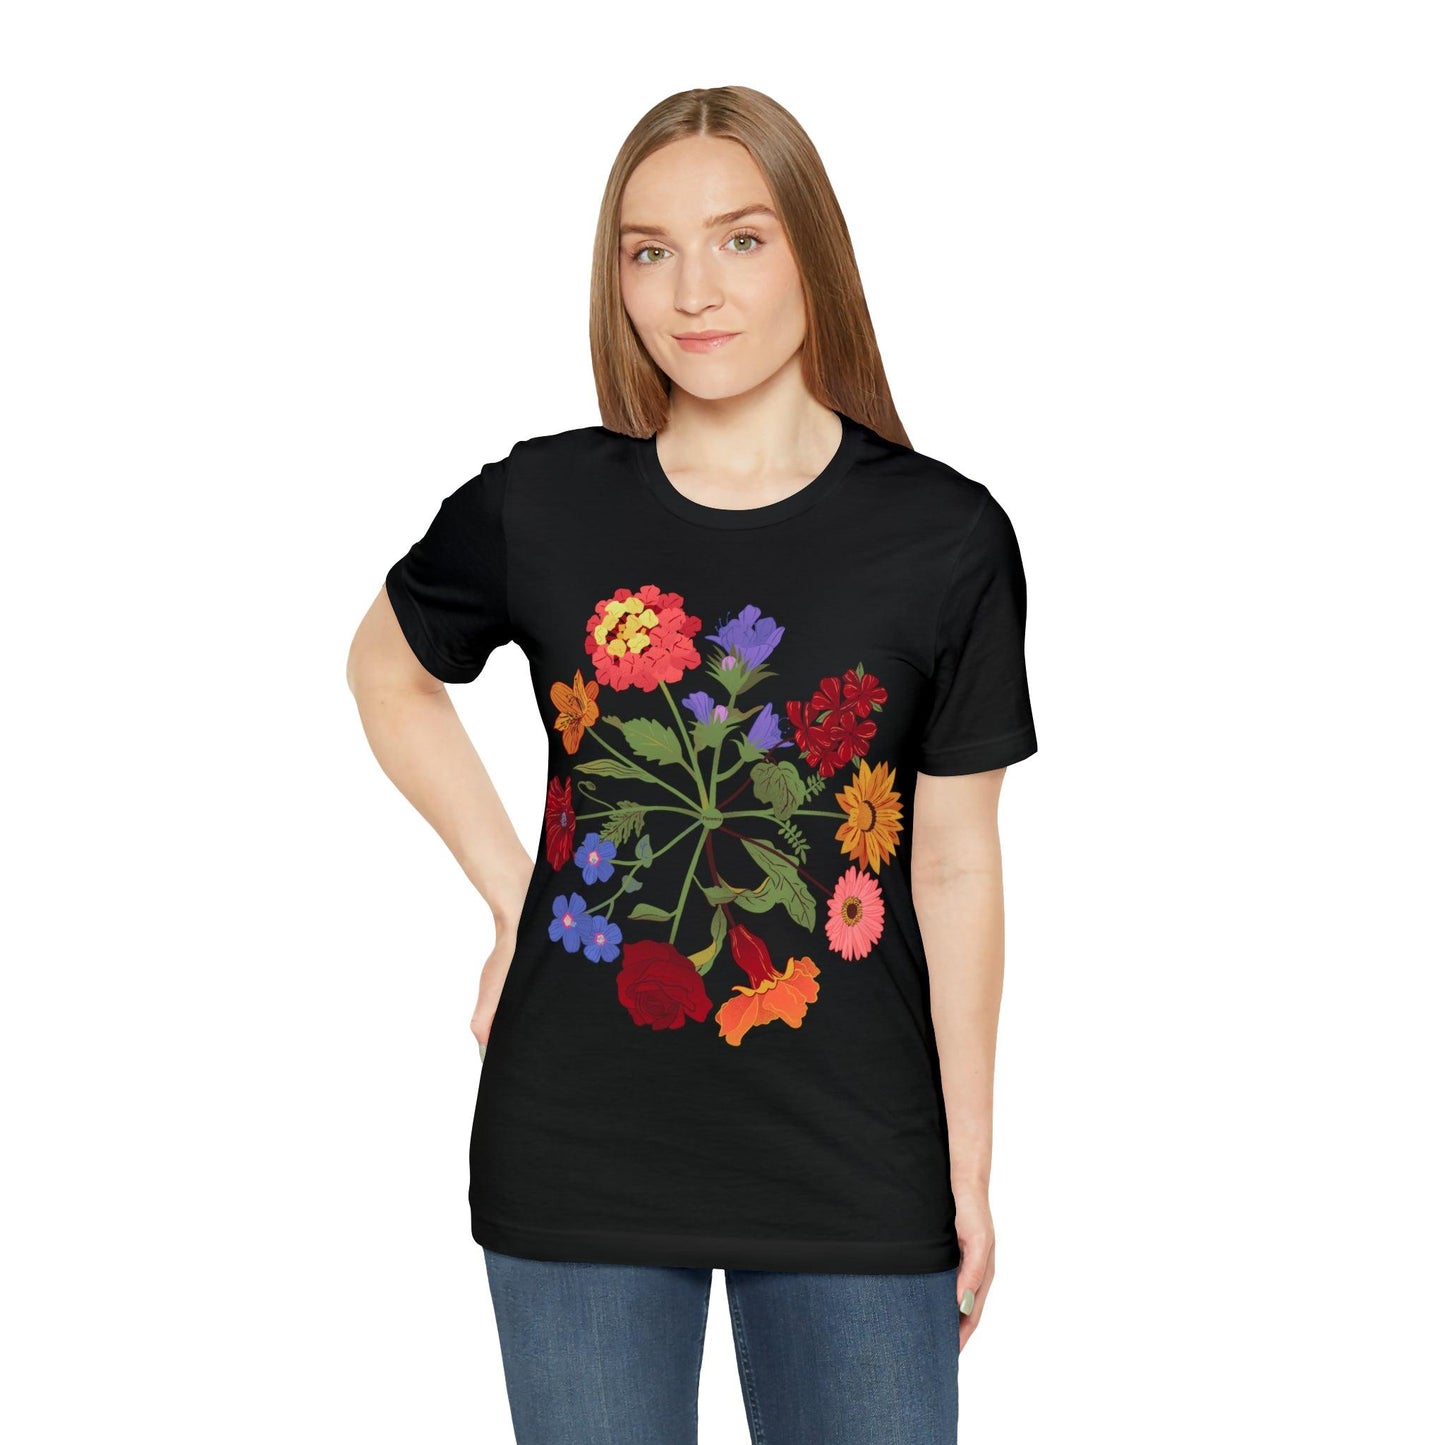 Wildflower Tshirt, Flower Shirt, Types of Flowers Shirt, Floral Tshirt, Gift for Women, Ladies Shirts Best Friend Gift, Plant Mom Nature Tee